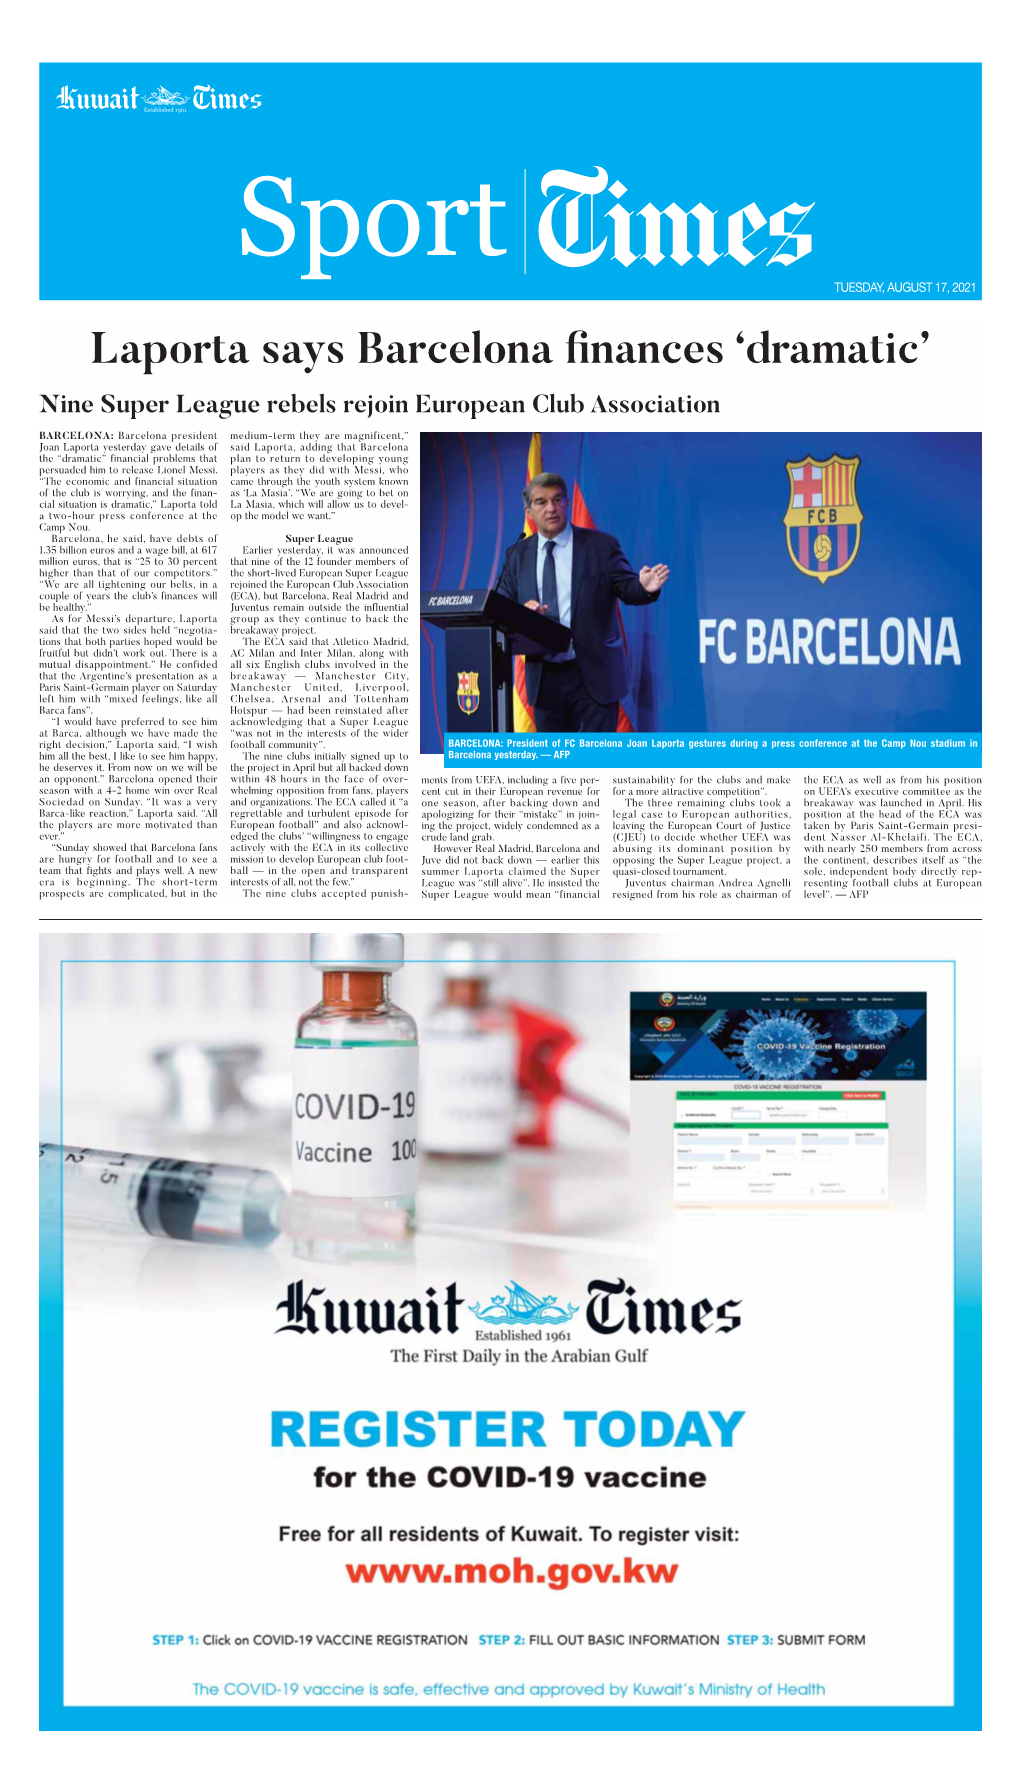 Laporta Says Barcelona Finances ‘Dramatic’ Nine Super League Rebels Rejoin European Club Association